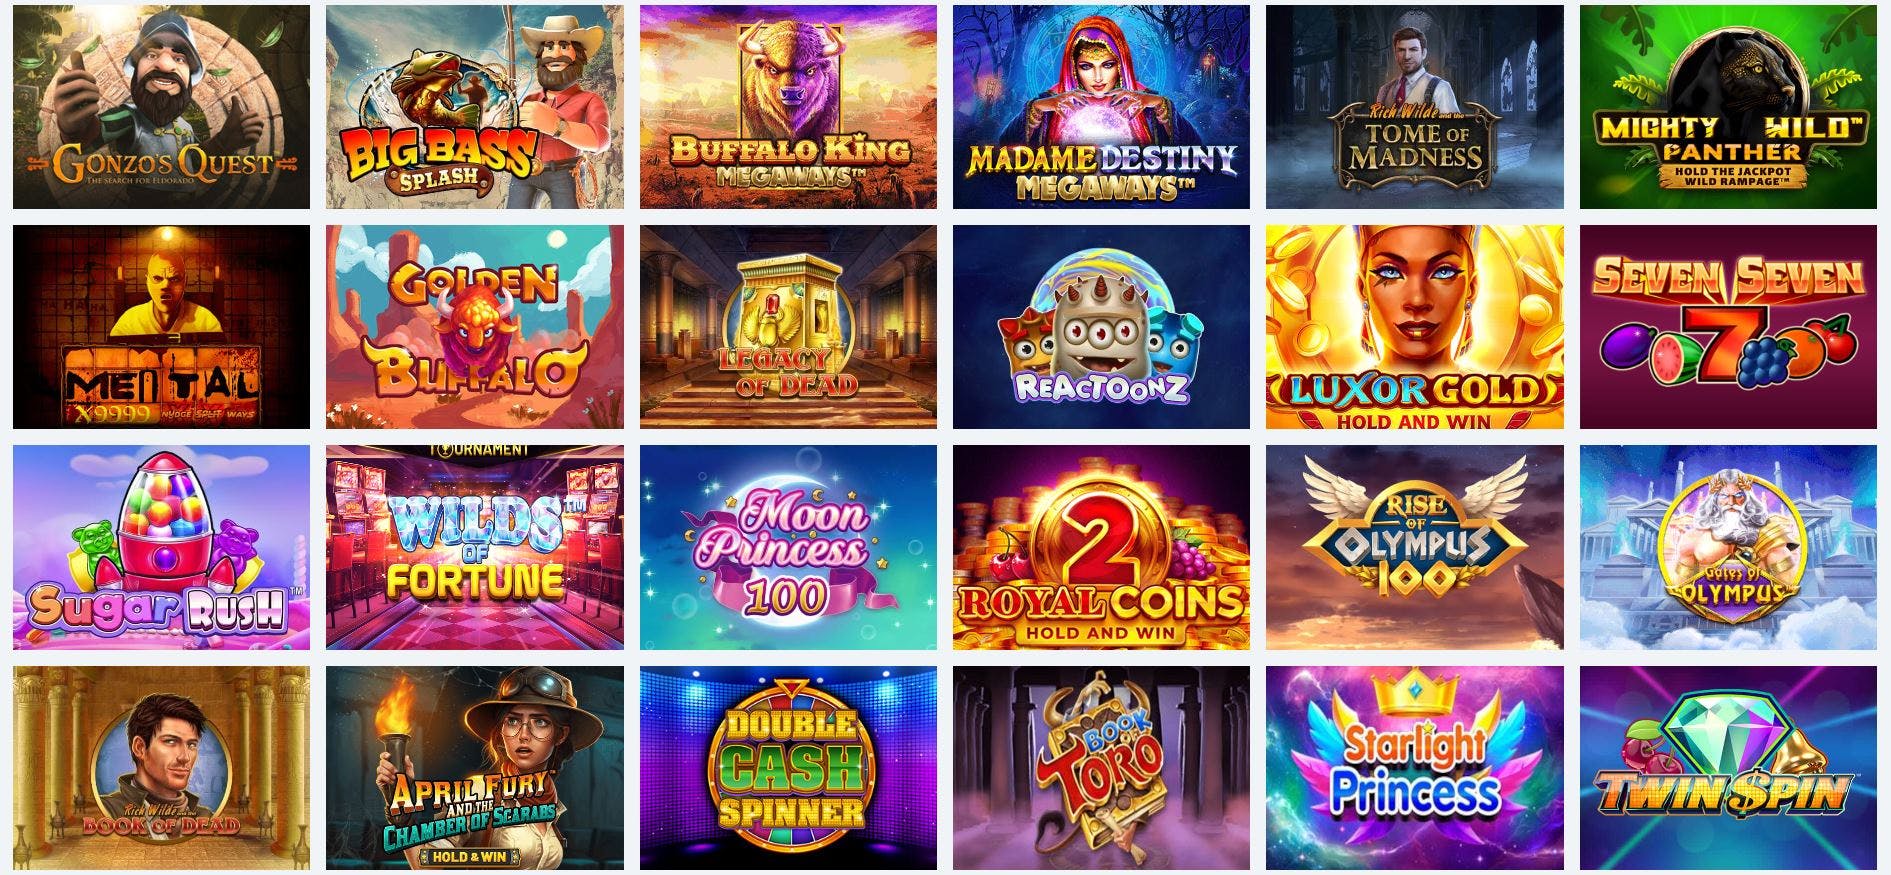 Wallacebet Casino Online Spiele